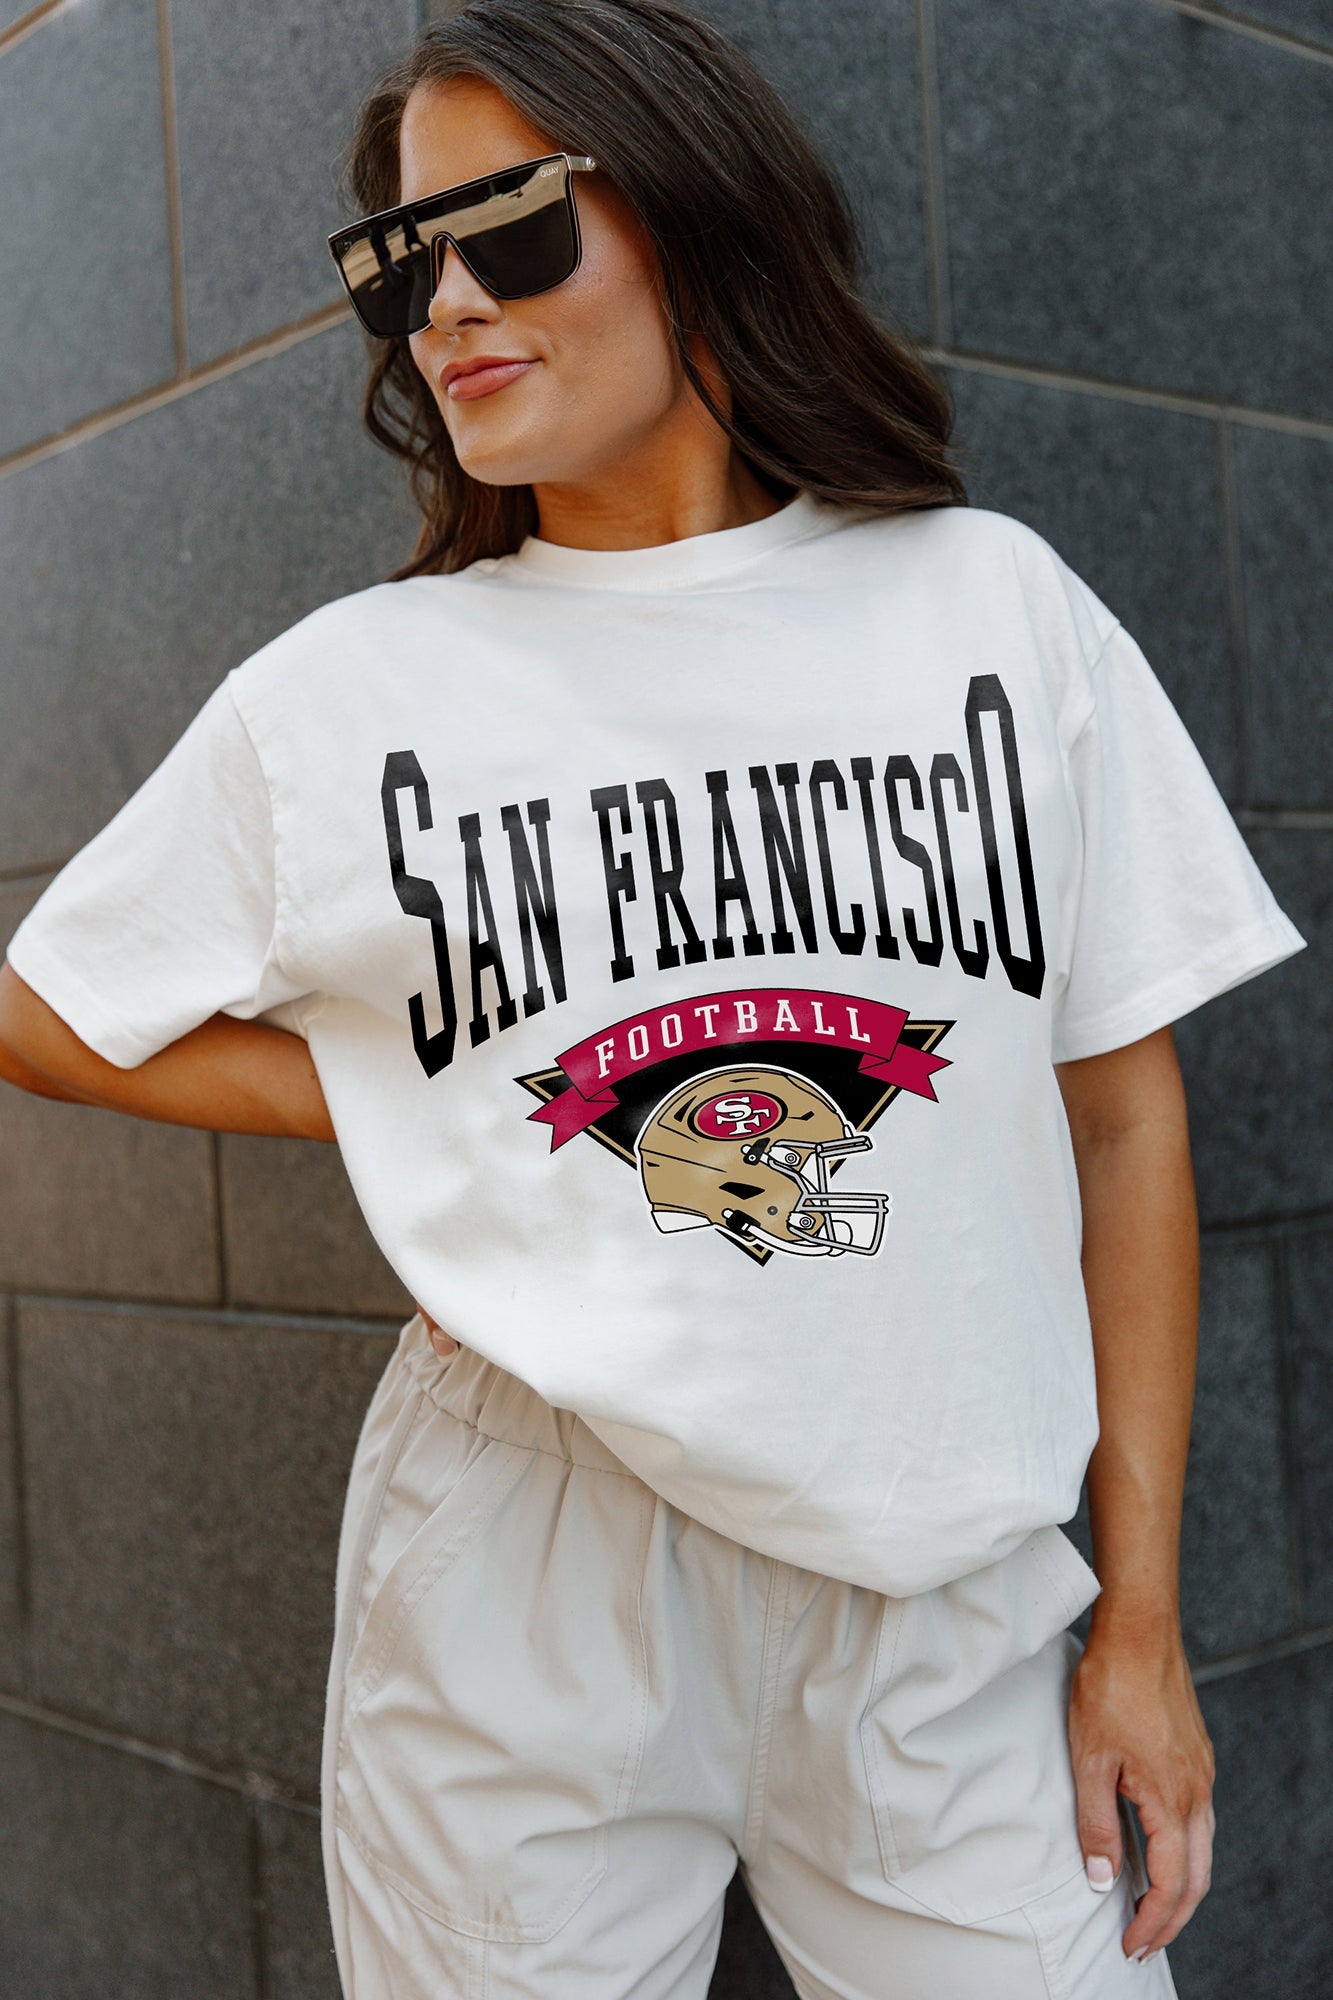 San Francisco 49ers NFL Womens Cold Shoulder T-Shirt